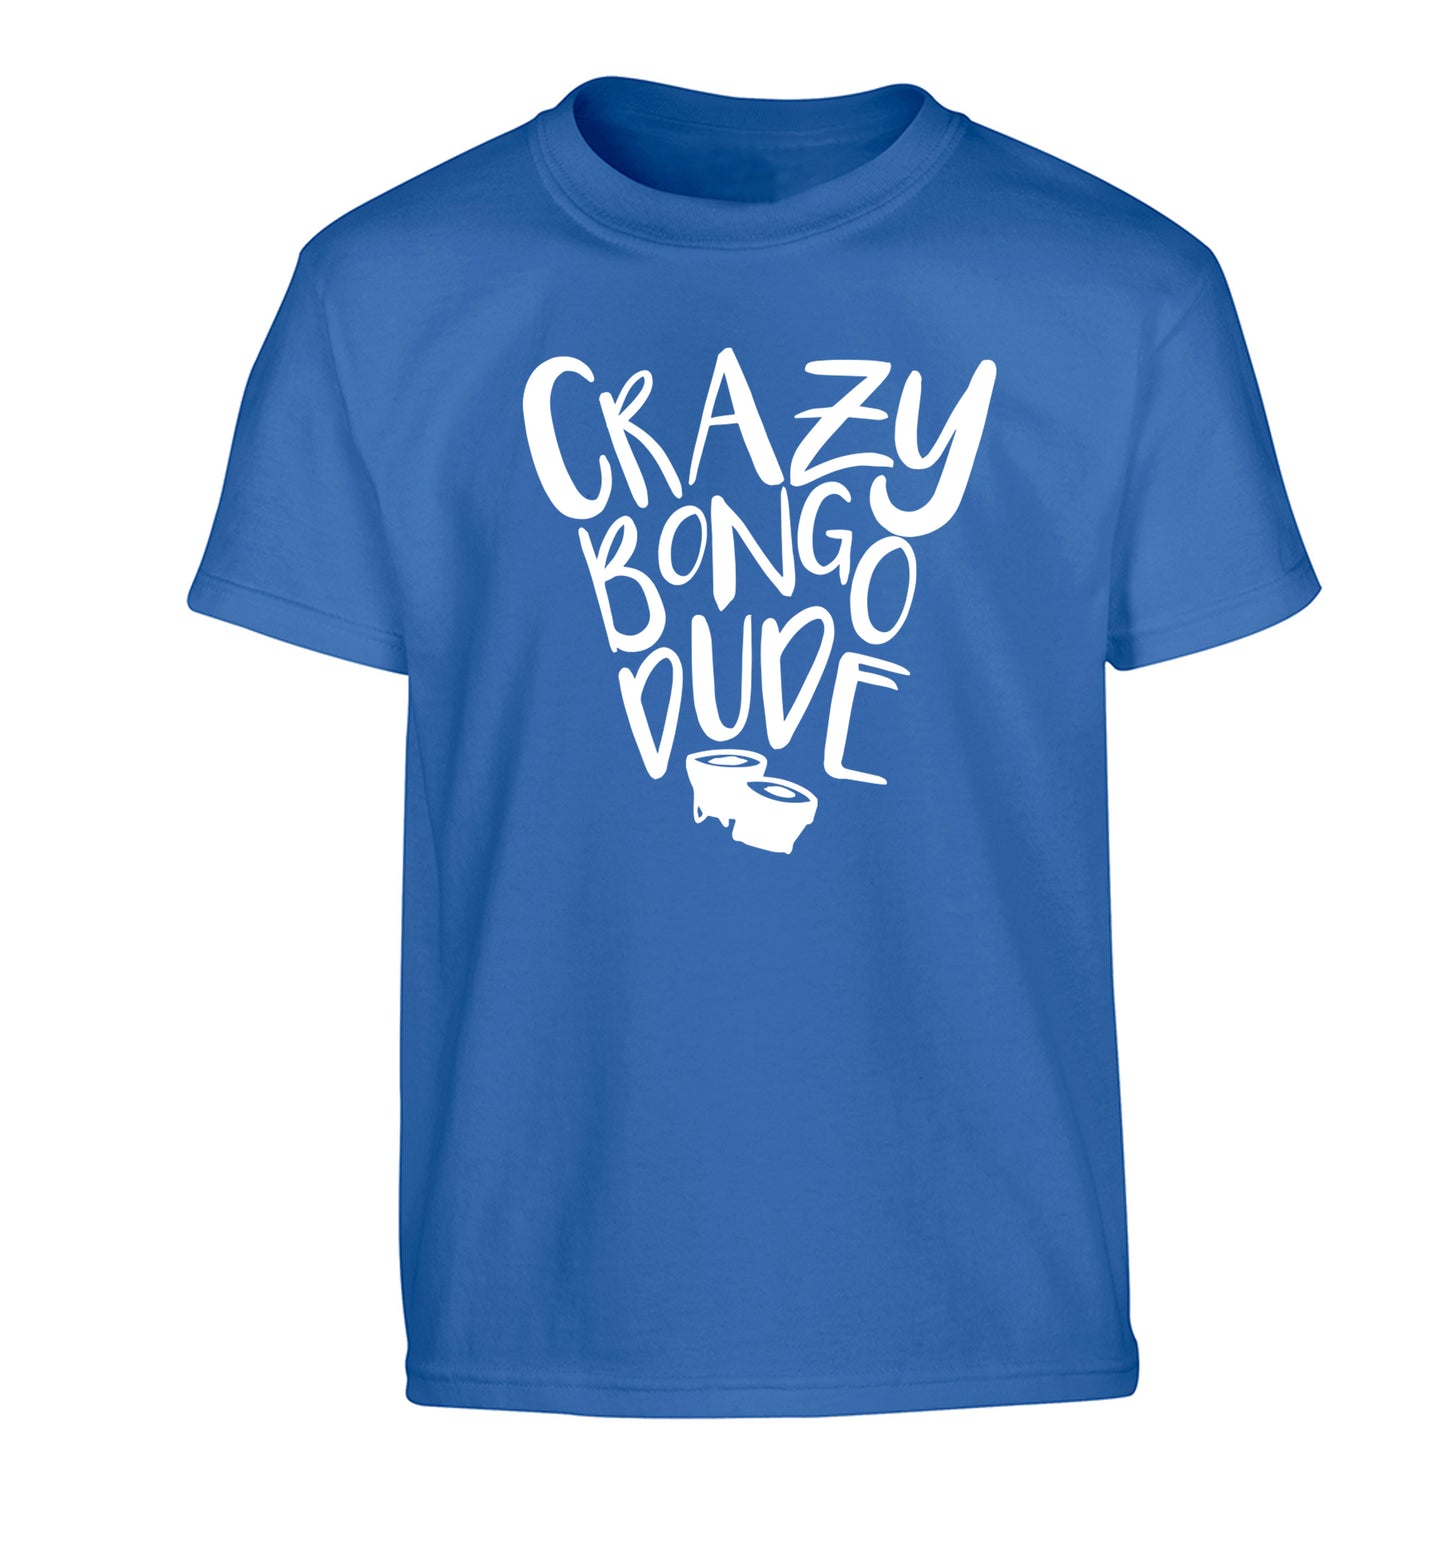 Crazy bongo dude Children's blue Tshirt 12-14 Years